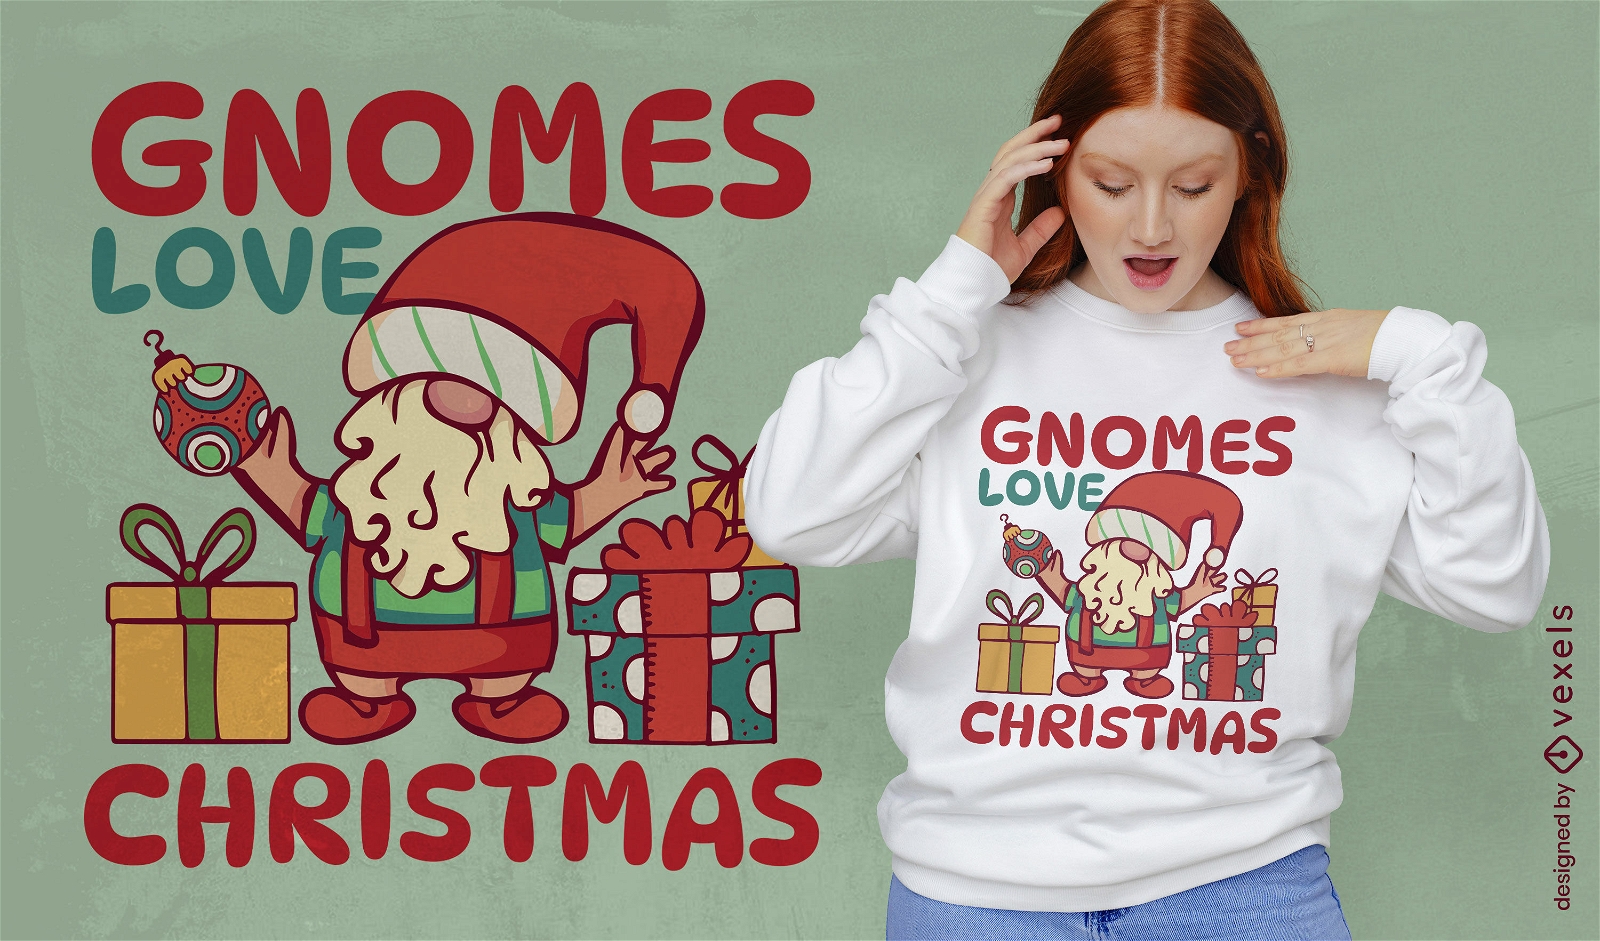 A los gnomos les encanta el dise?o de camiseta navide?a.